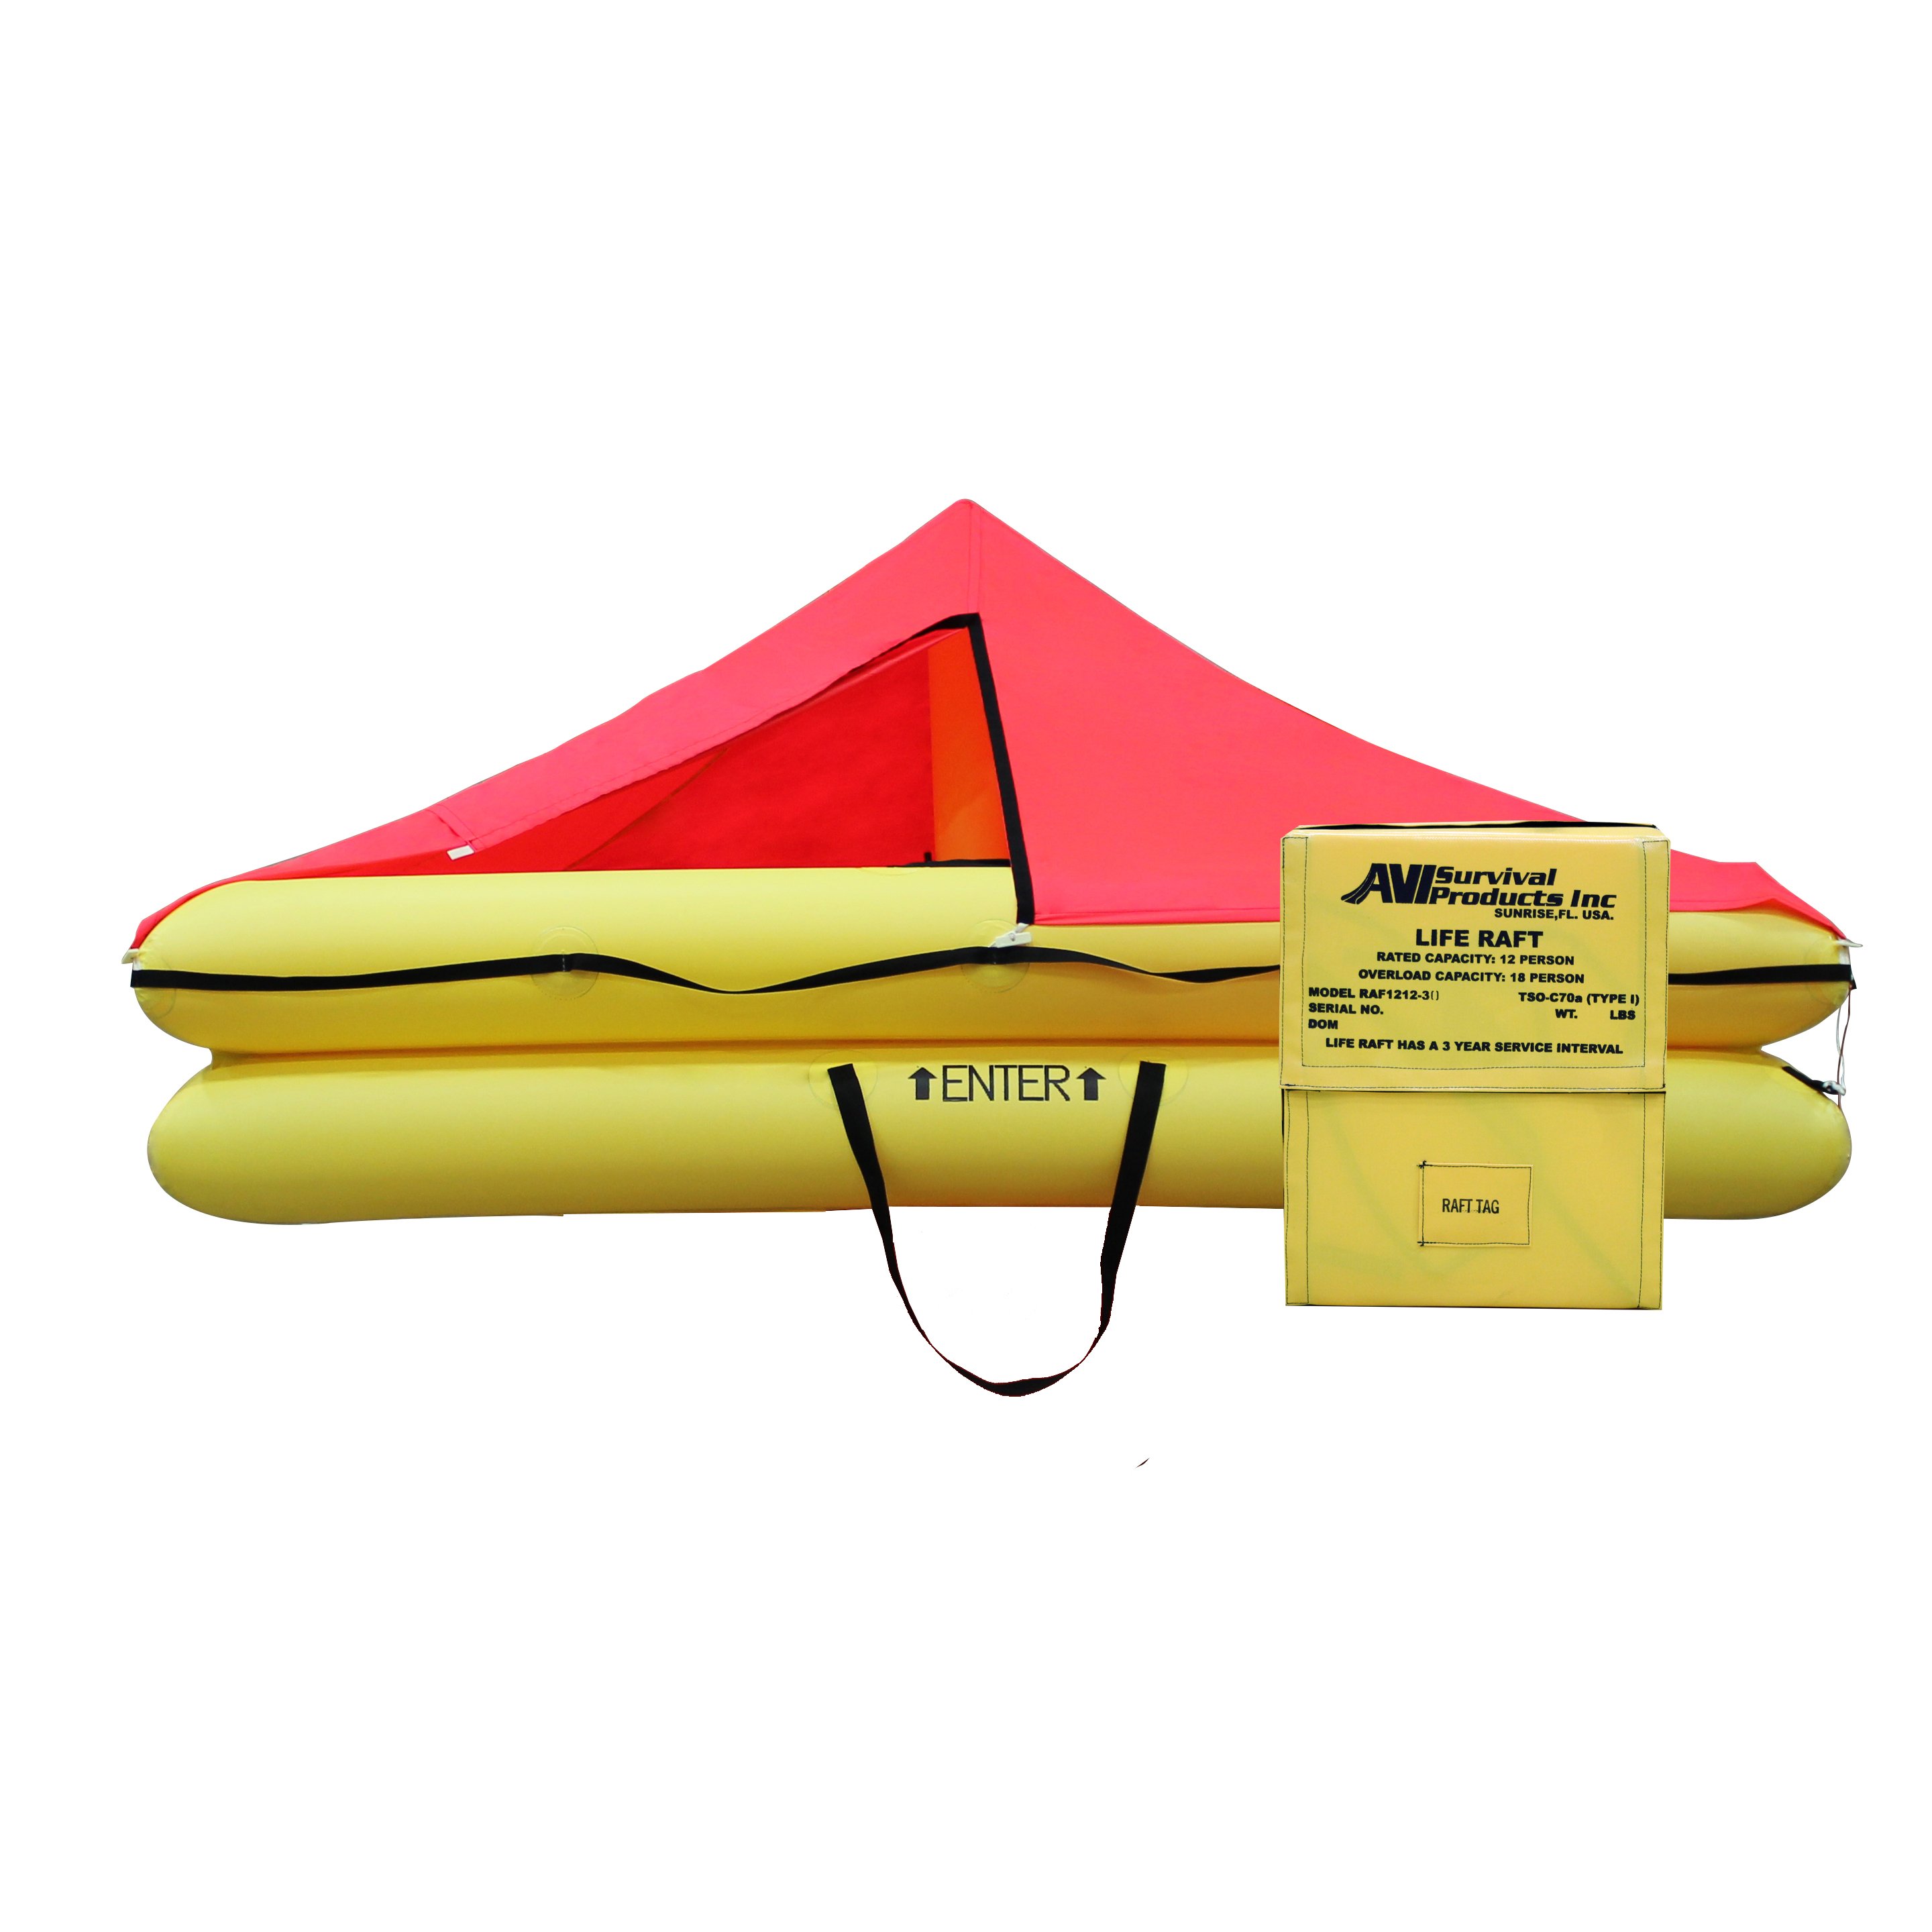 TSO 12 Person Life Raft with FAR 135 Survival Equipment Kit